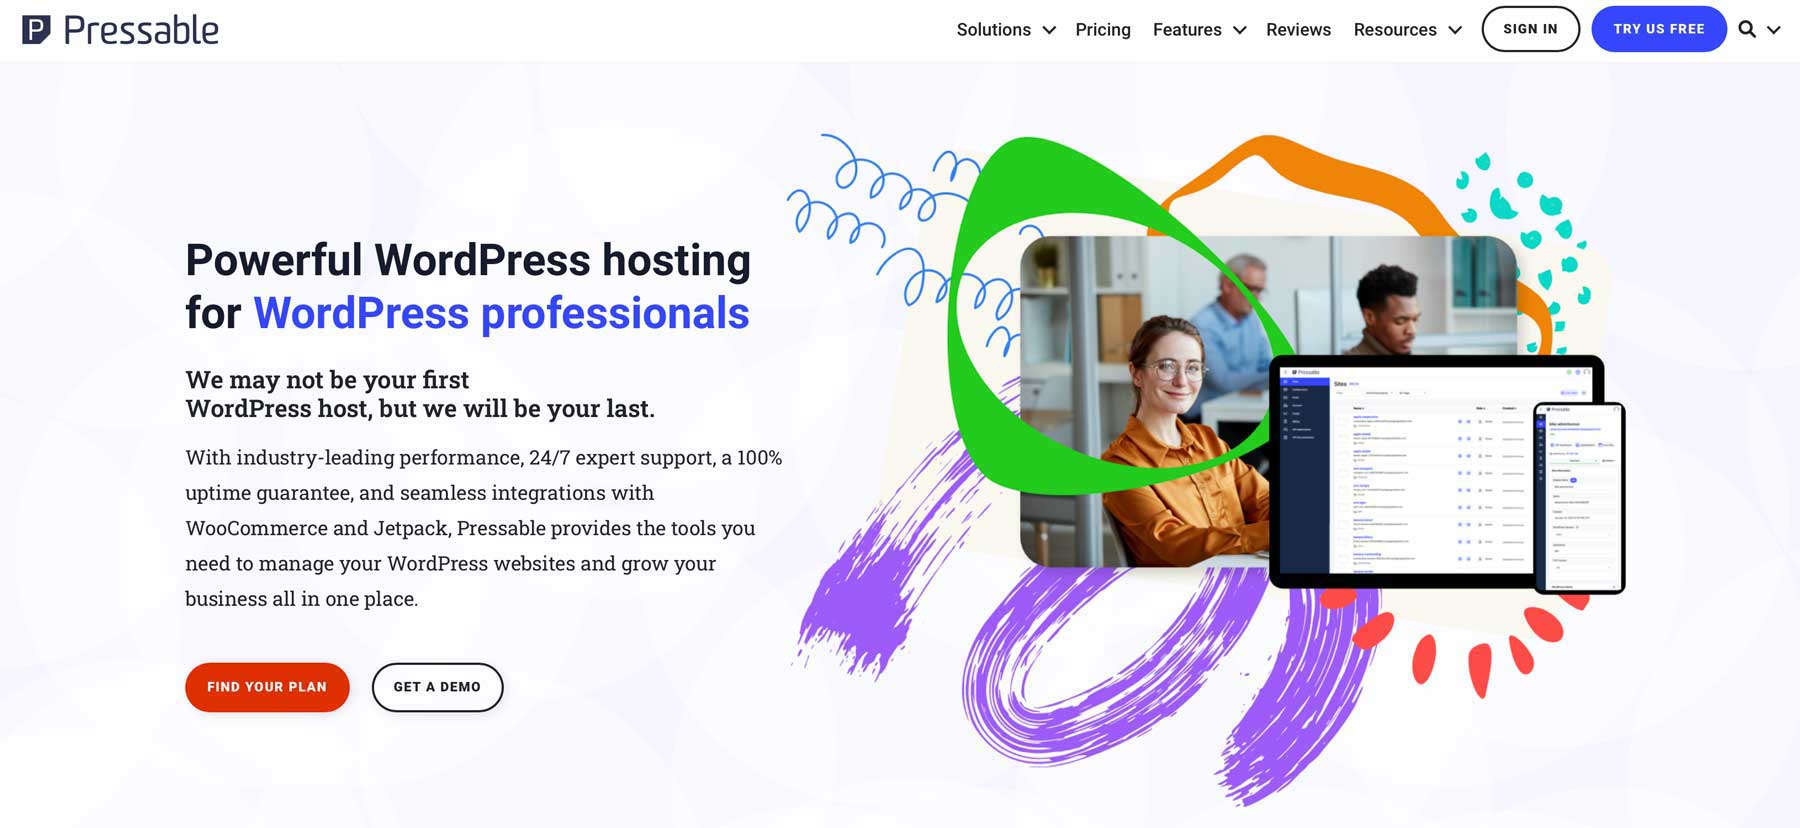 Pressable best WordPress hosting